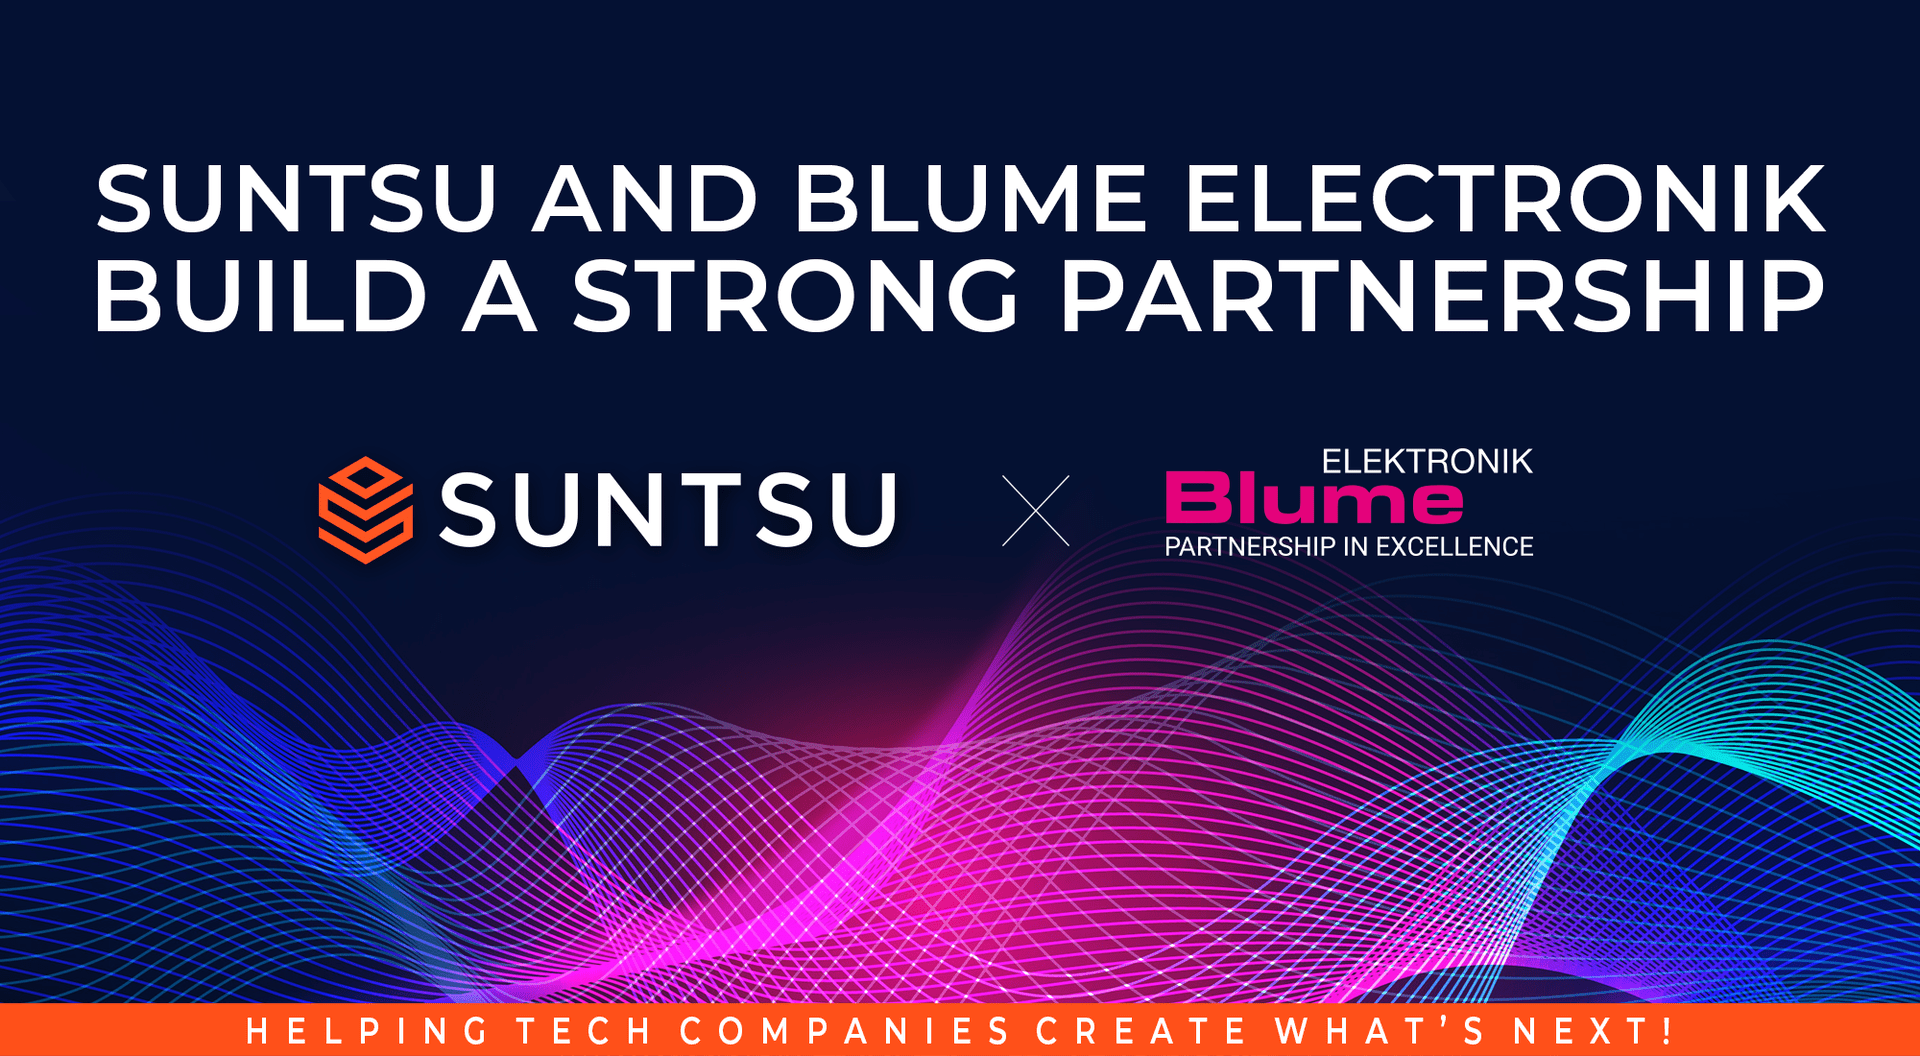 Suntsu and Blume Electronik partnership